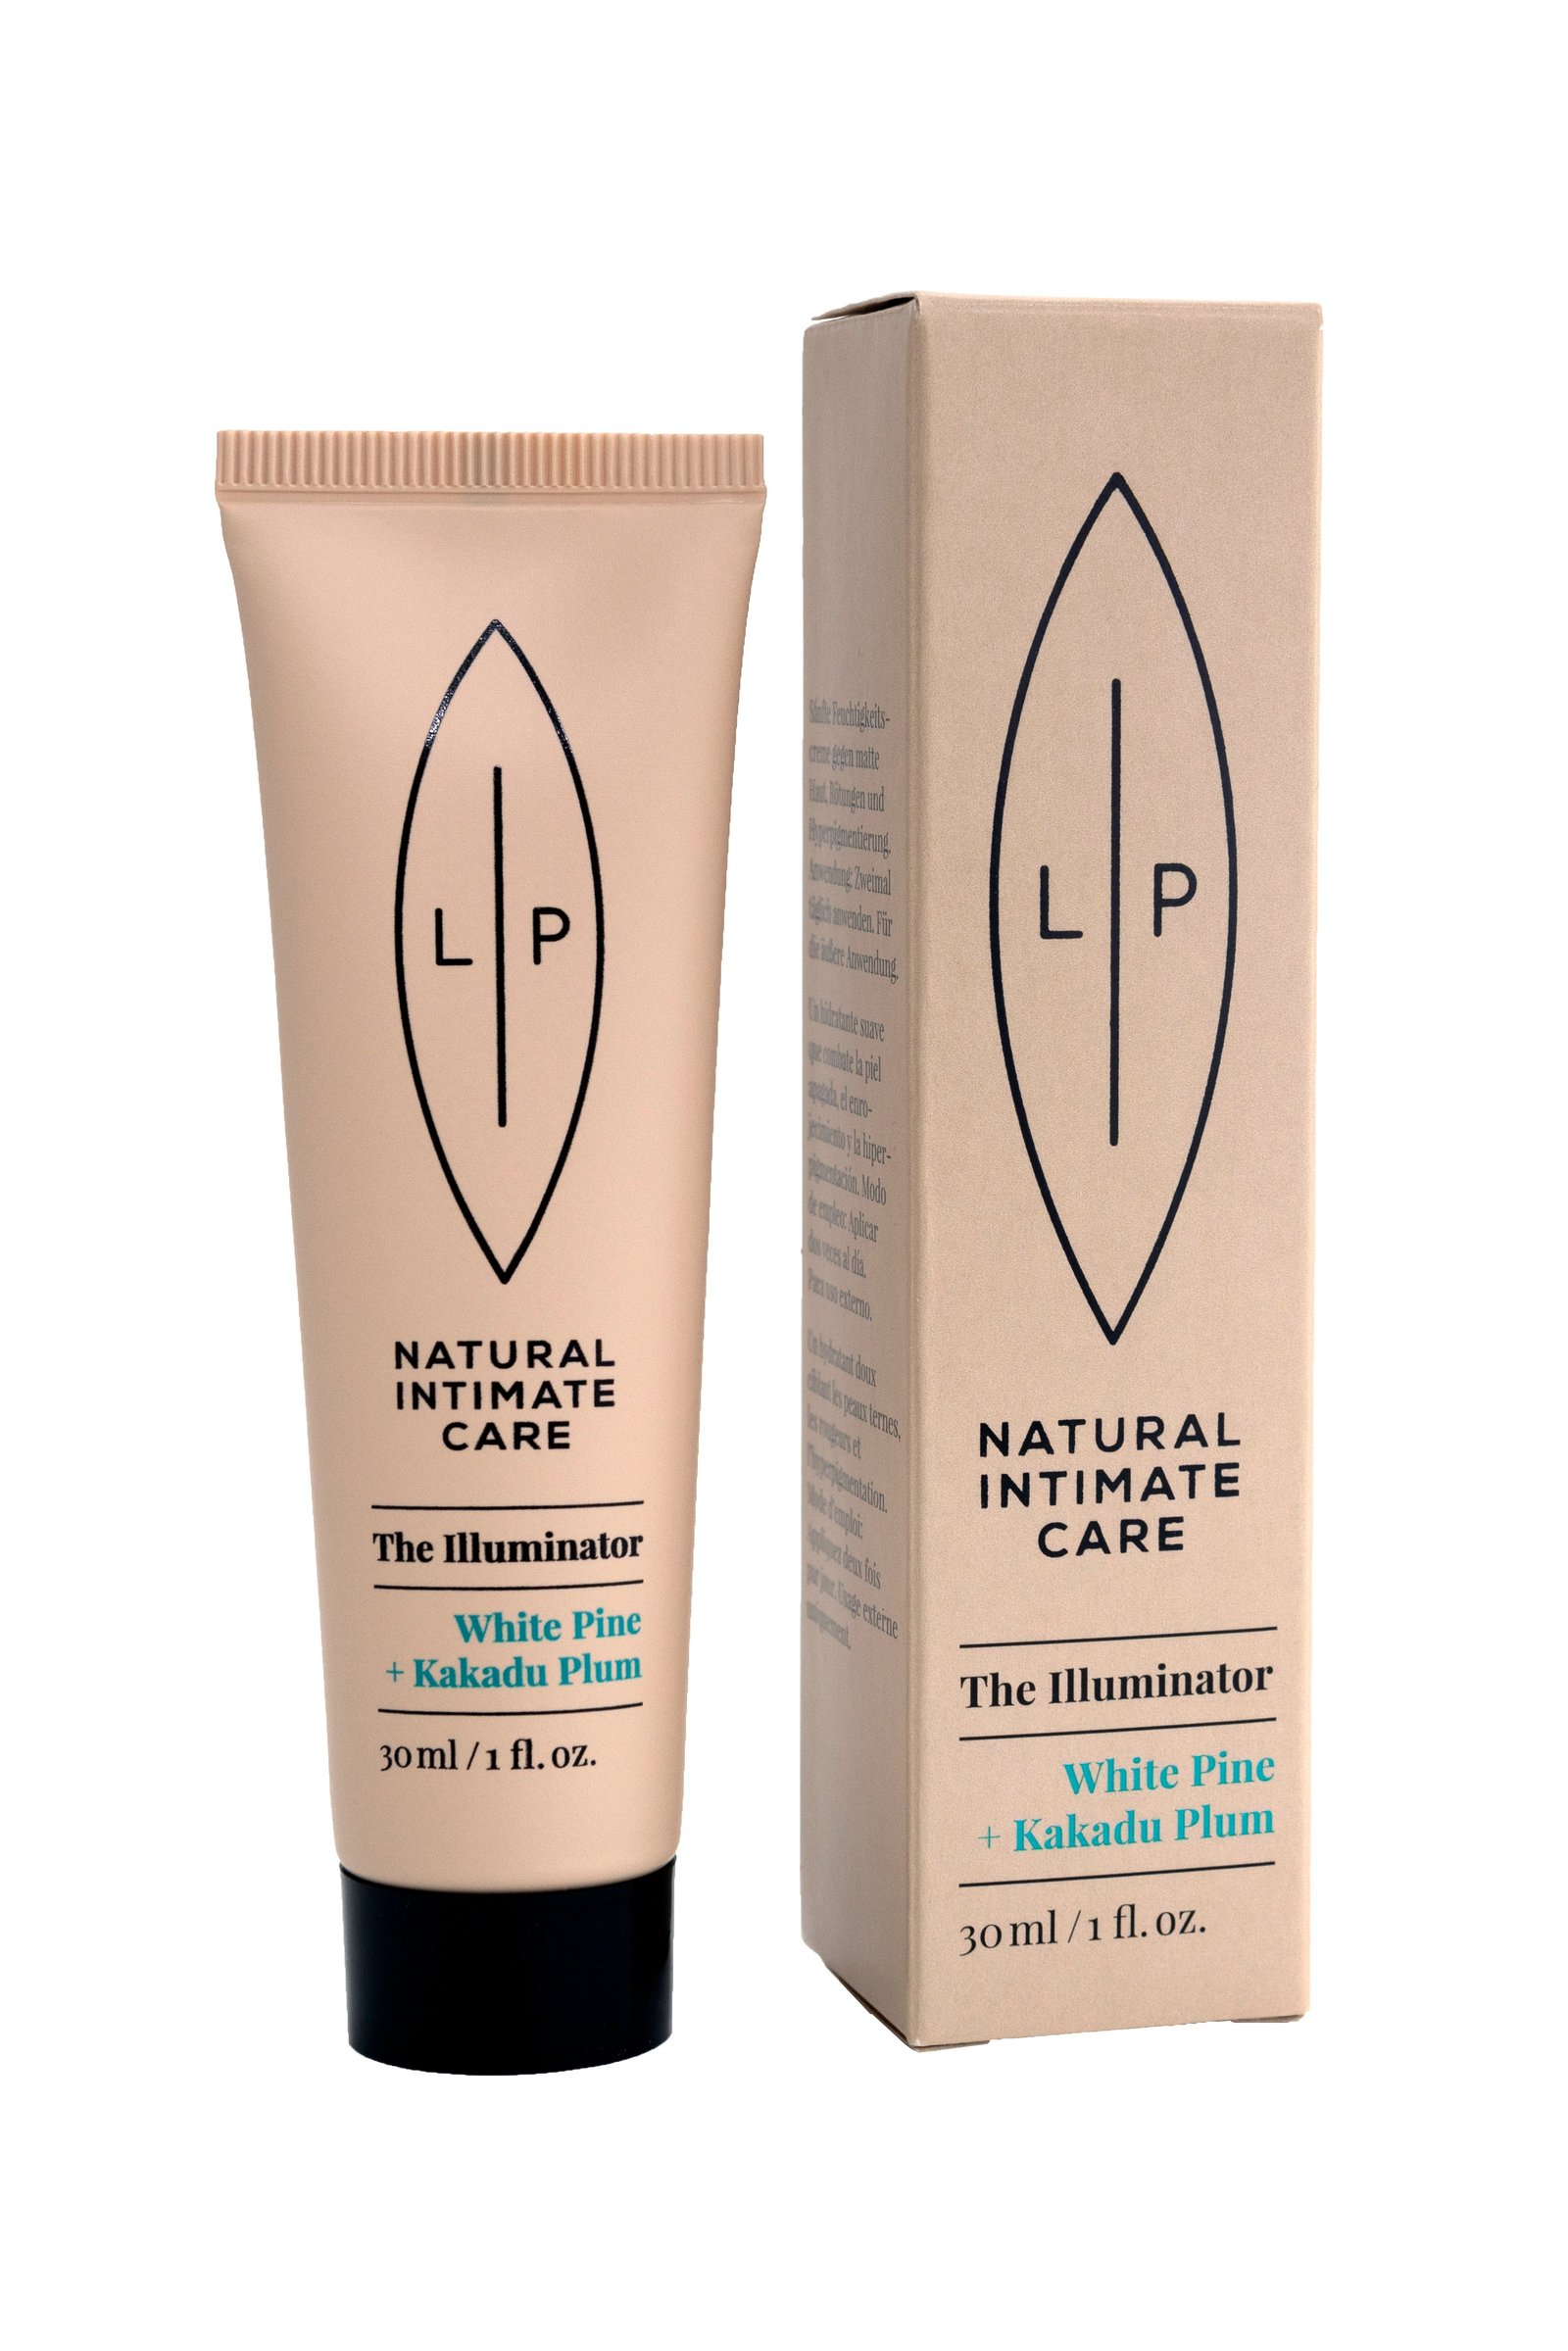 Lip Intimate Care The Illuminator White Pine + Kakadu Plum